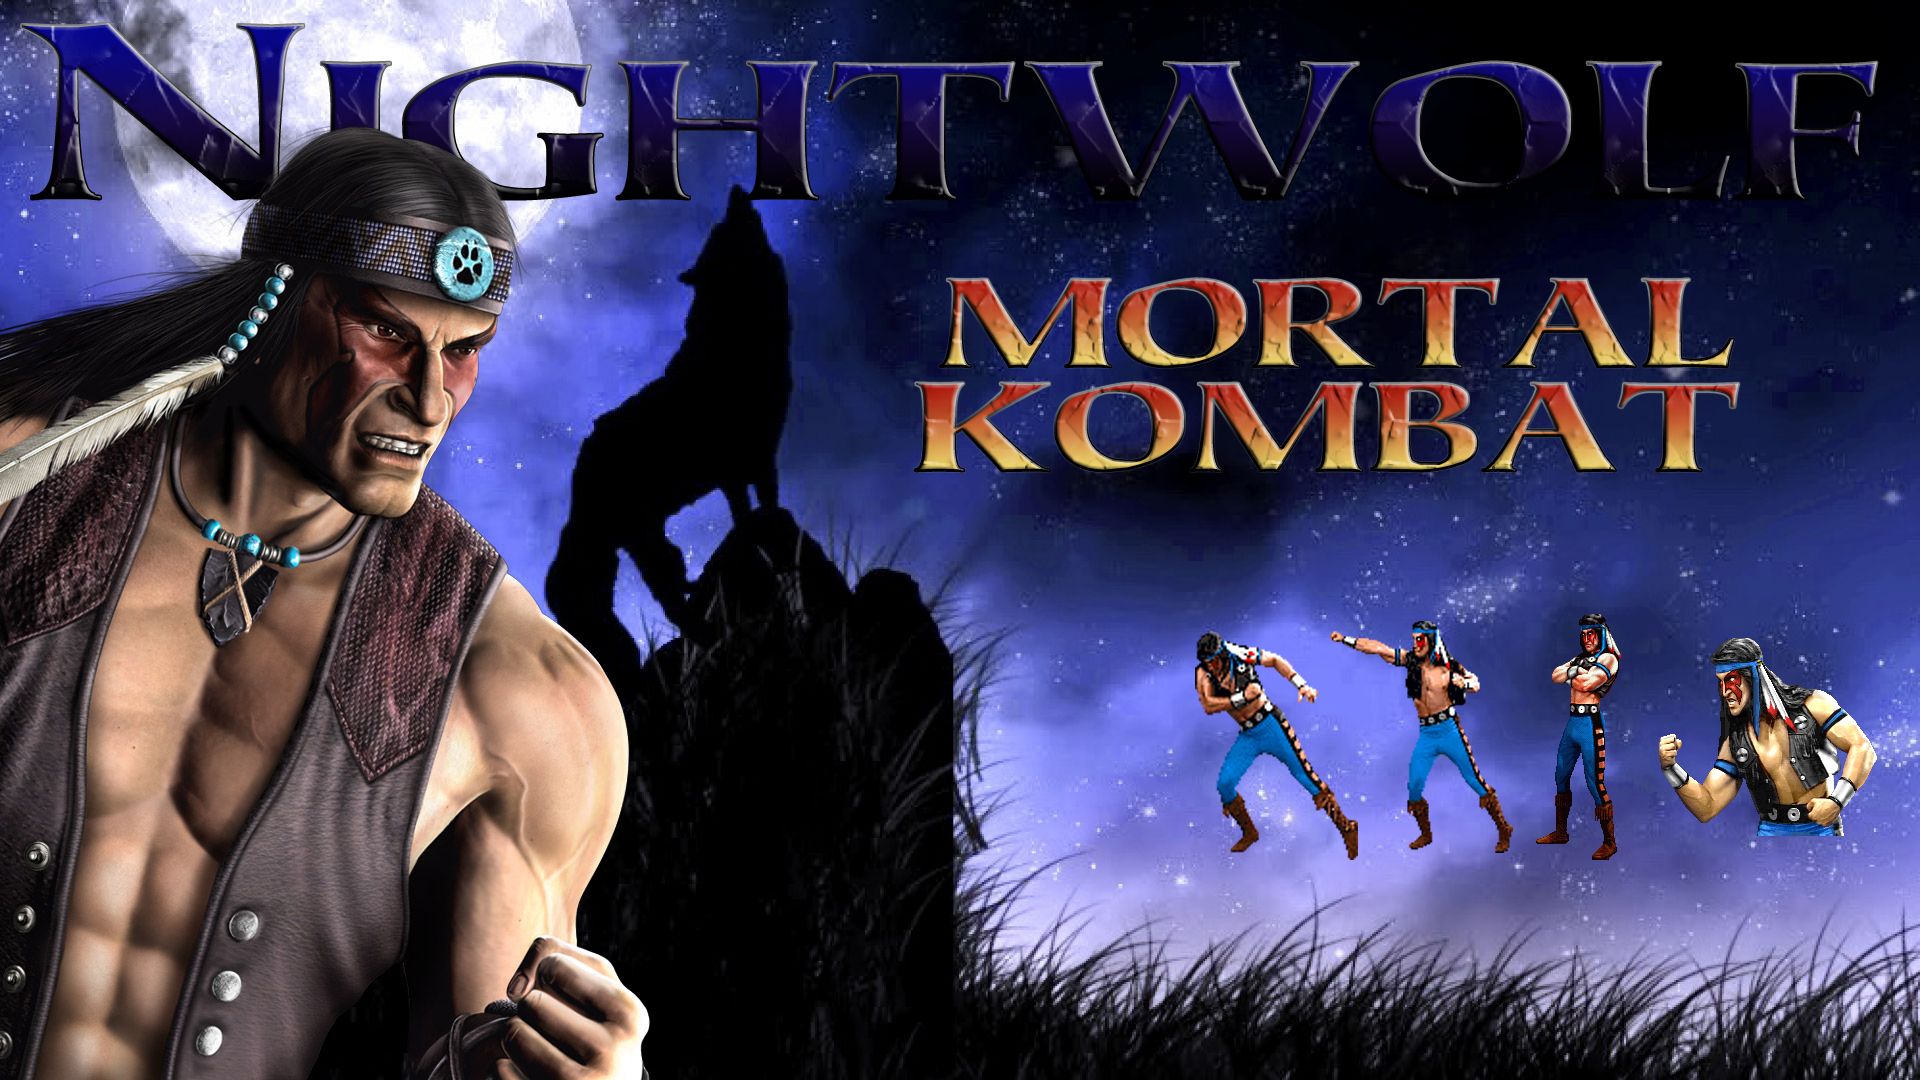 Mortal Kombat Nightwolf Wallpaper .hipwallpaper.com